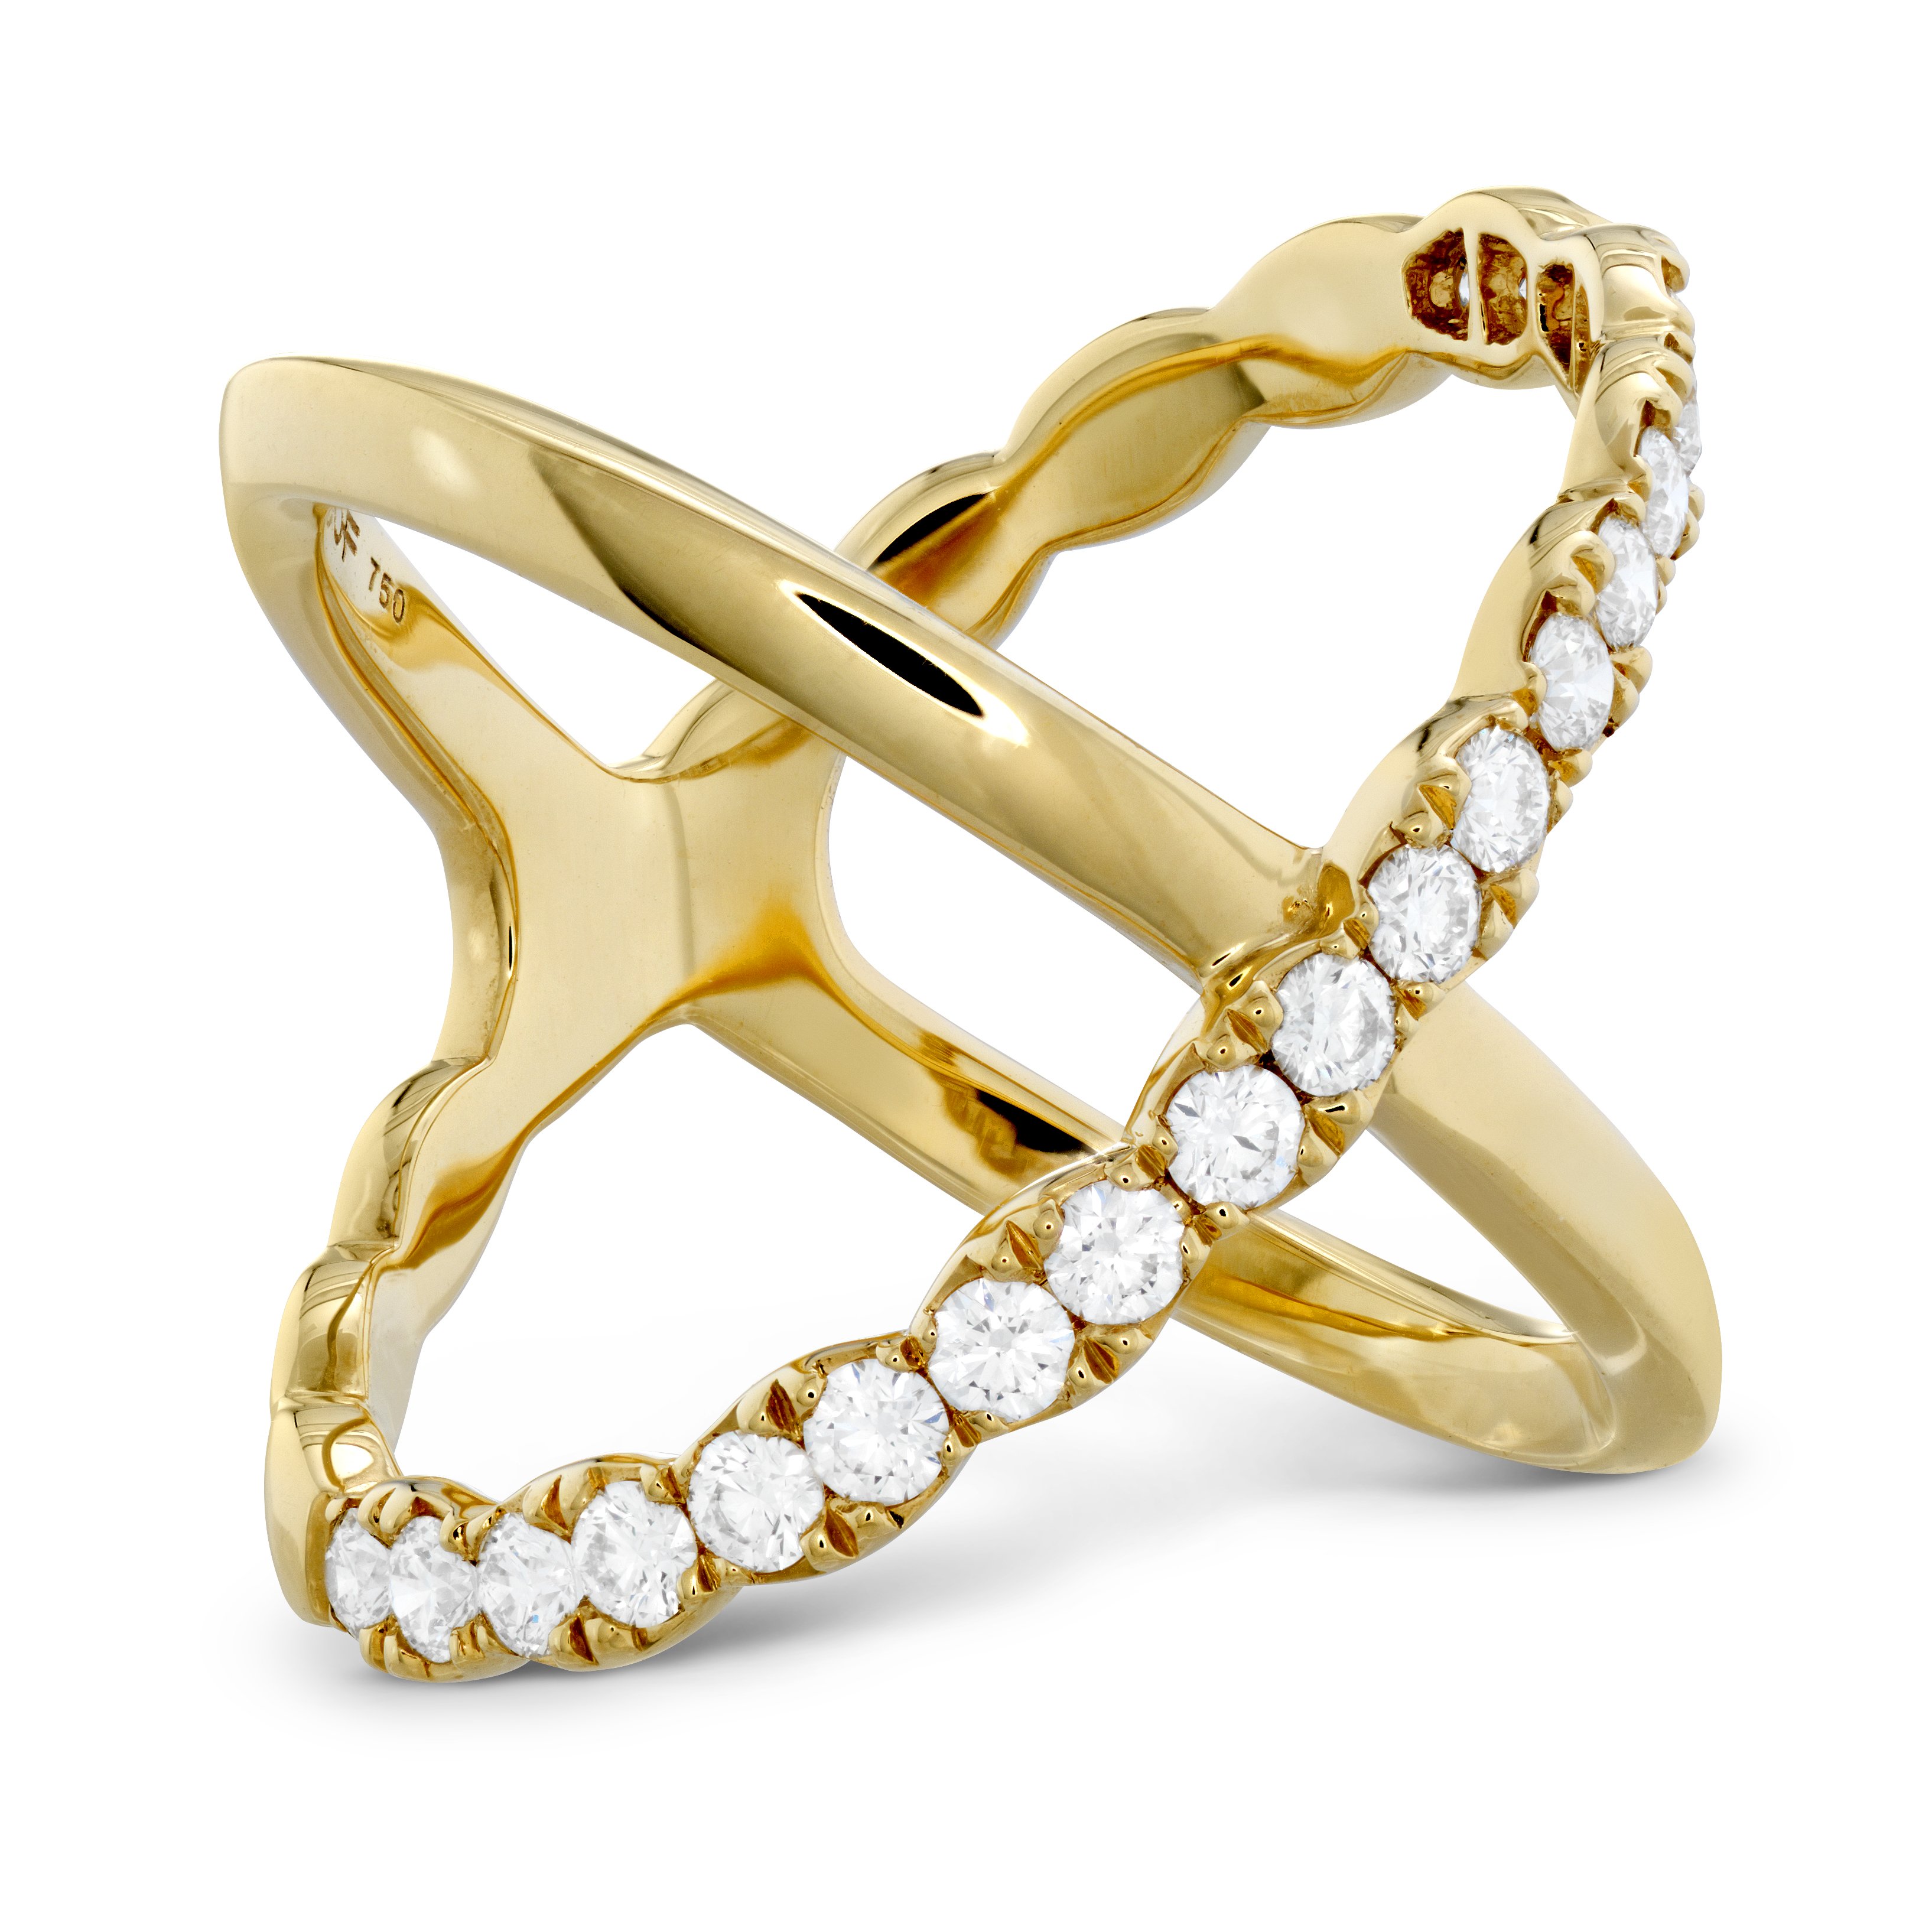 https://www.arthursjewelers.com/content/images/thumbs/Original/Lorelei Criss Cross Ring_2-19362139.jpg